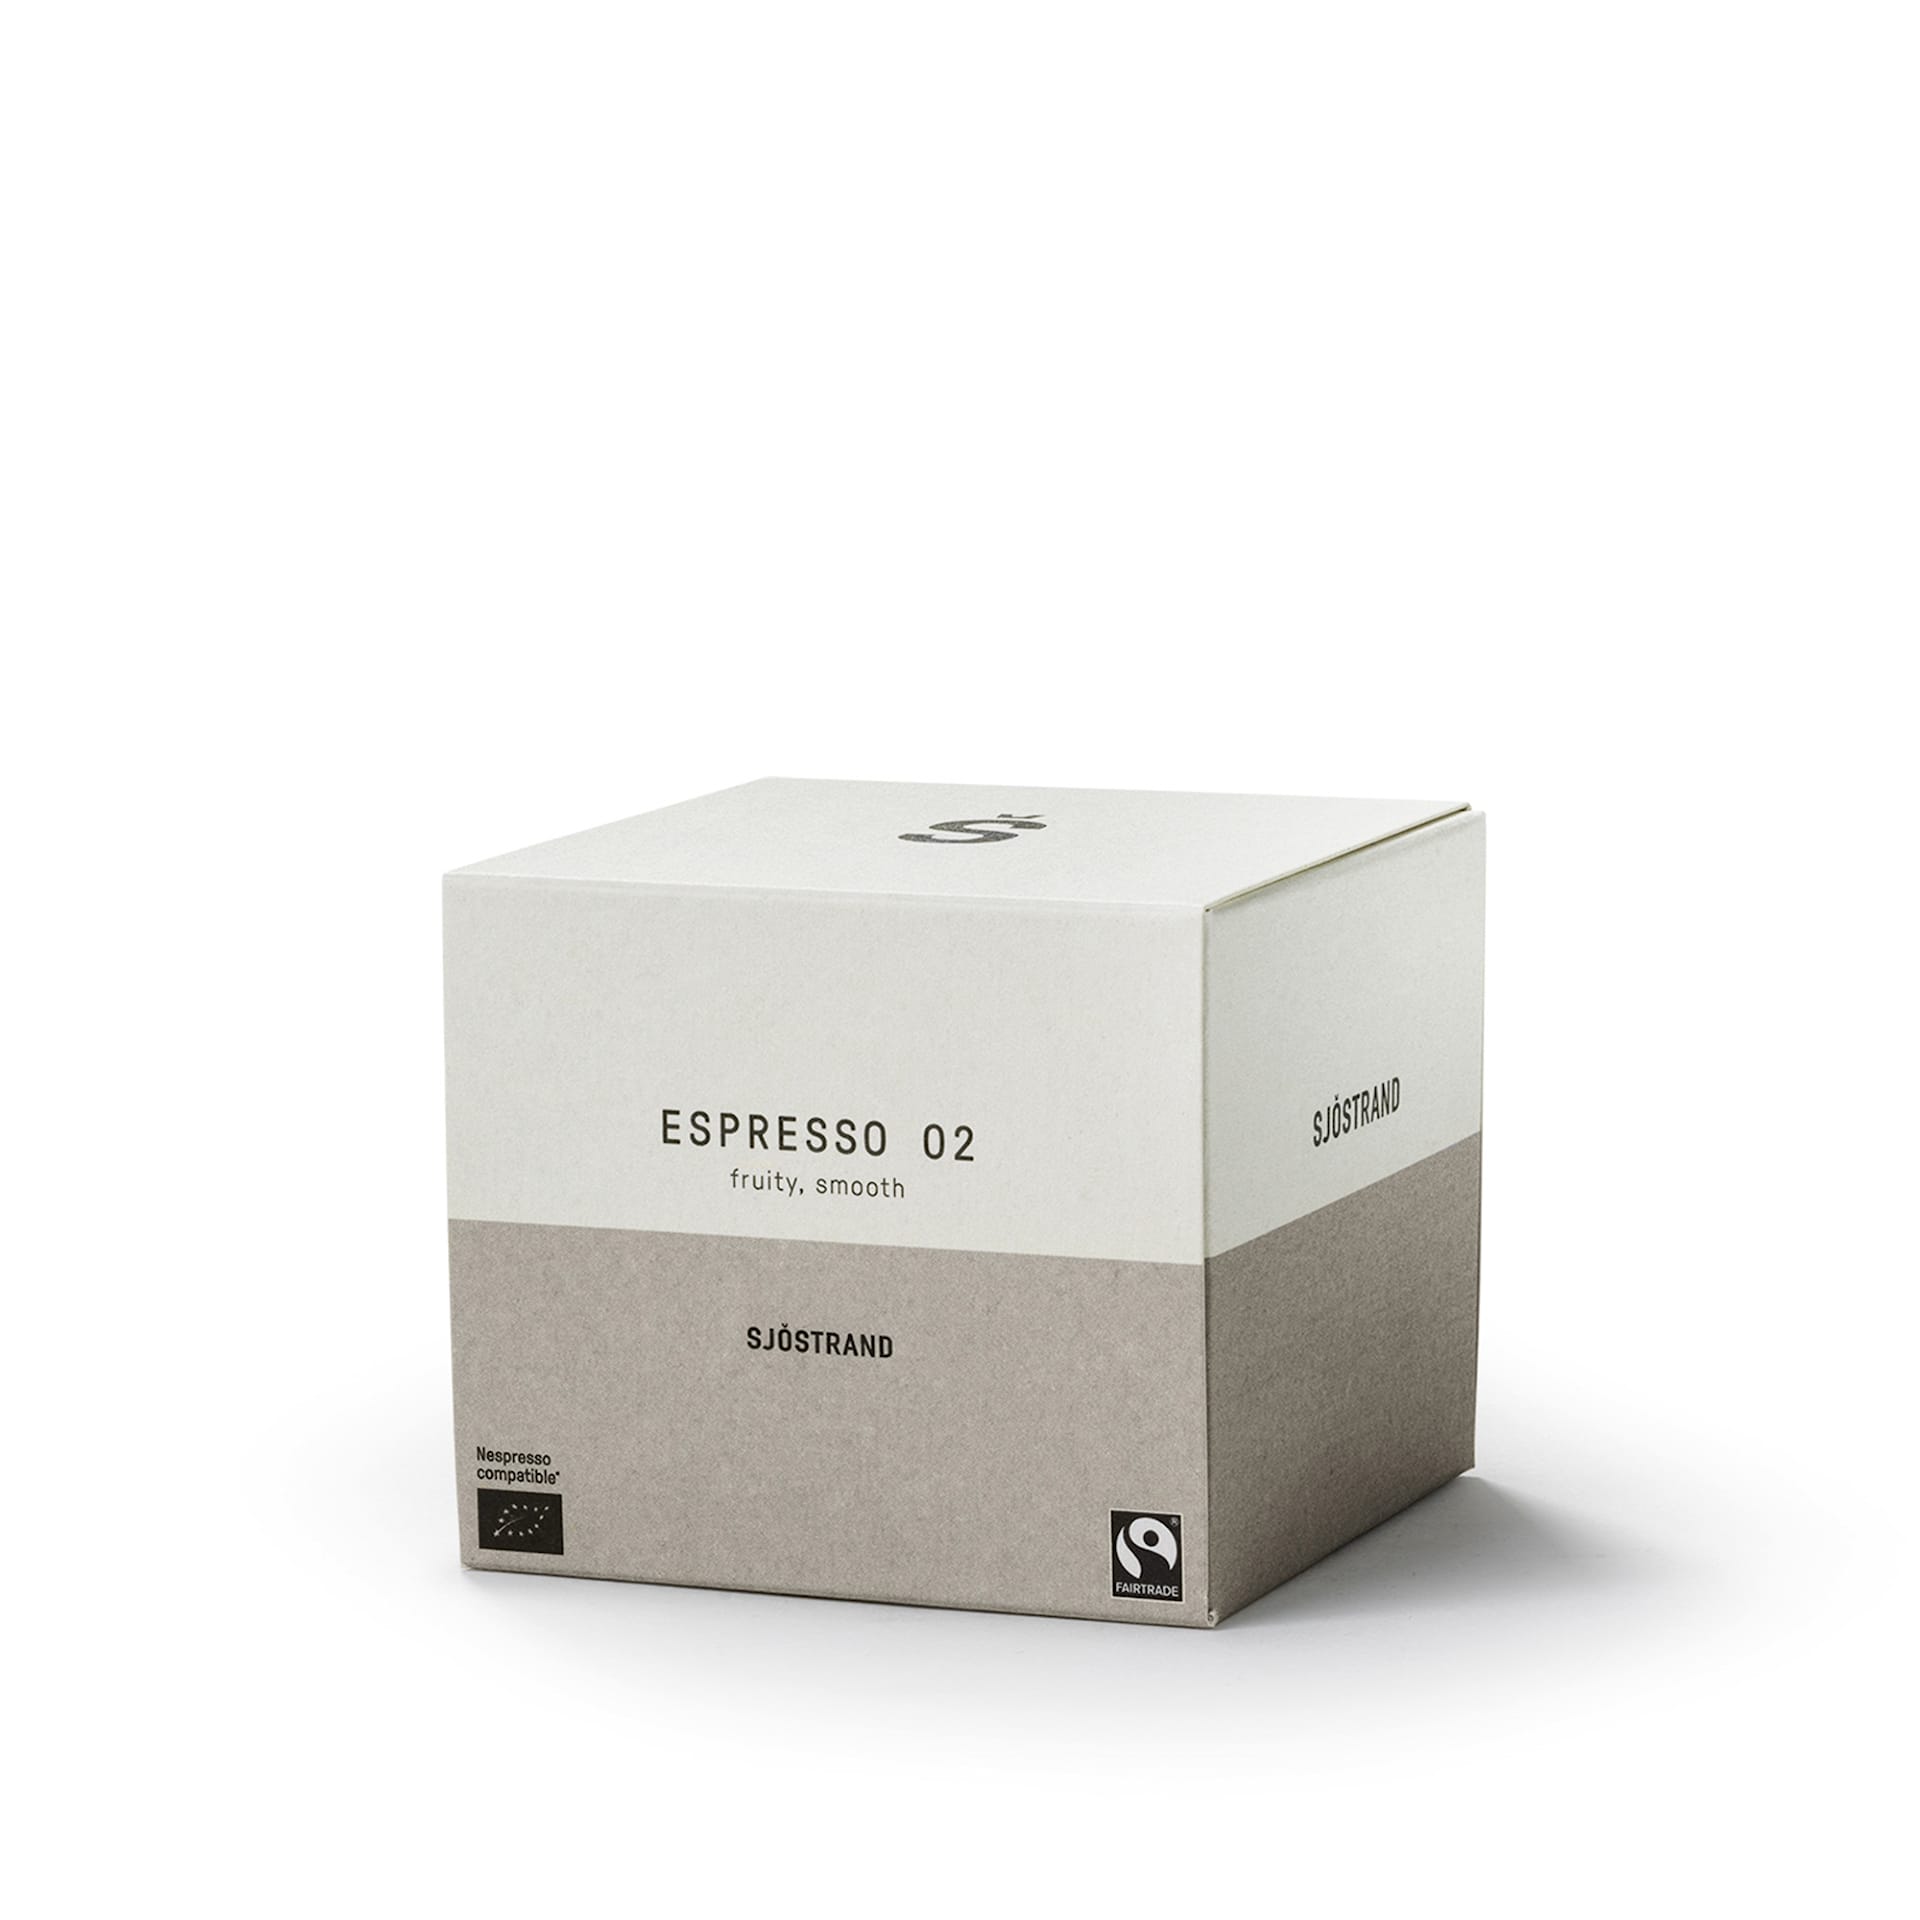 N°2 Espresso 10-pack - Sjöstrand Coffee Concept - NO GA